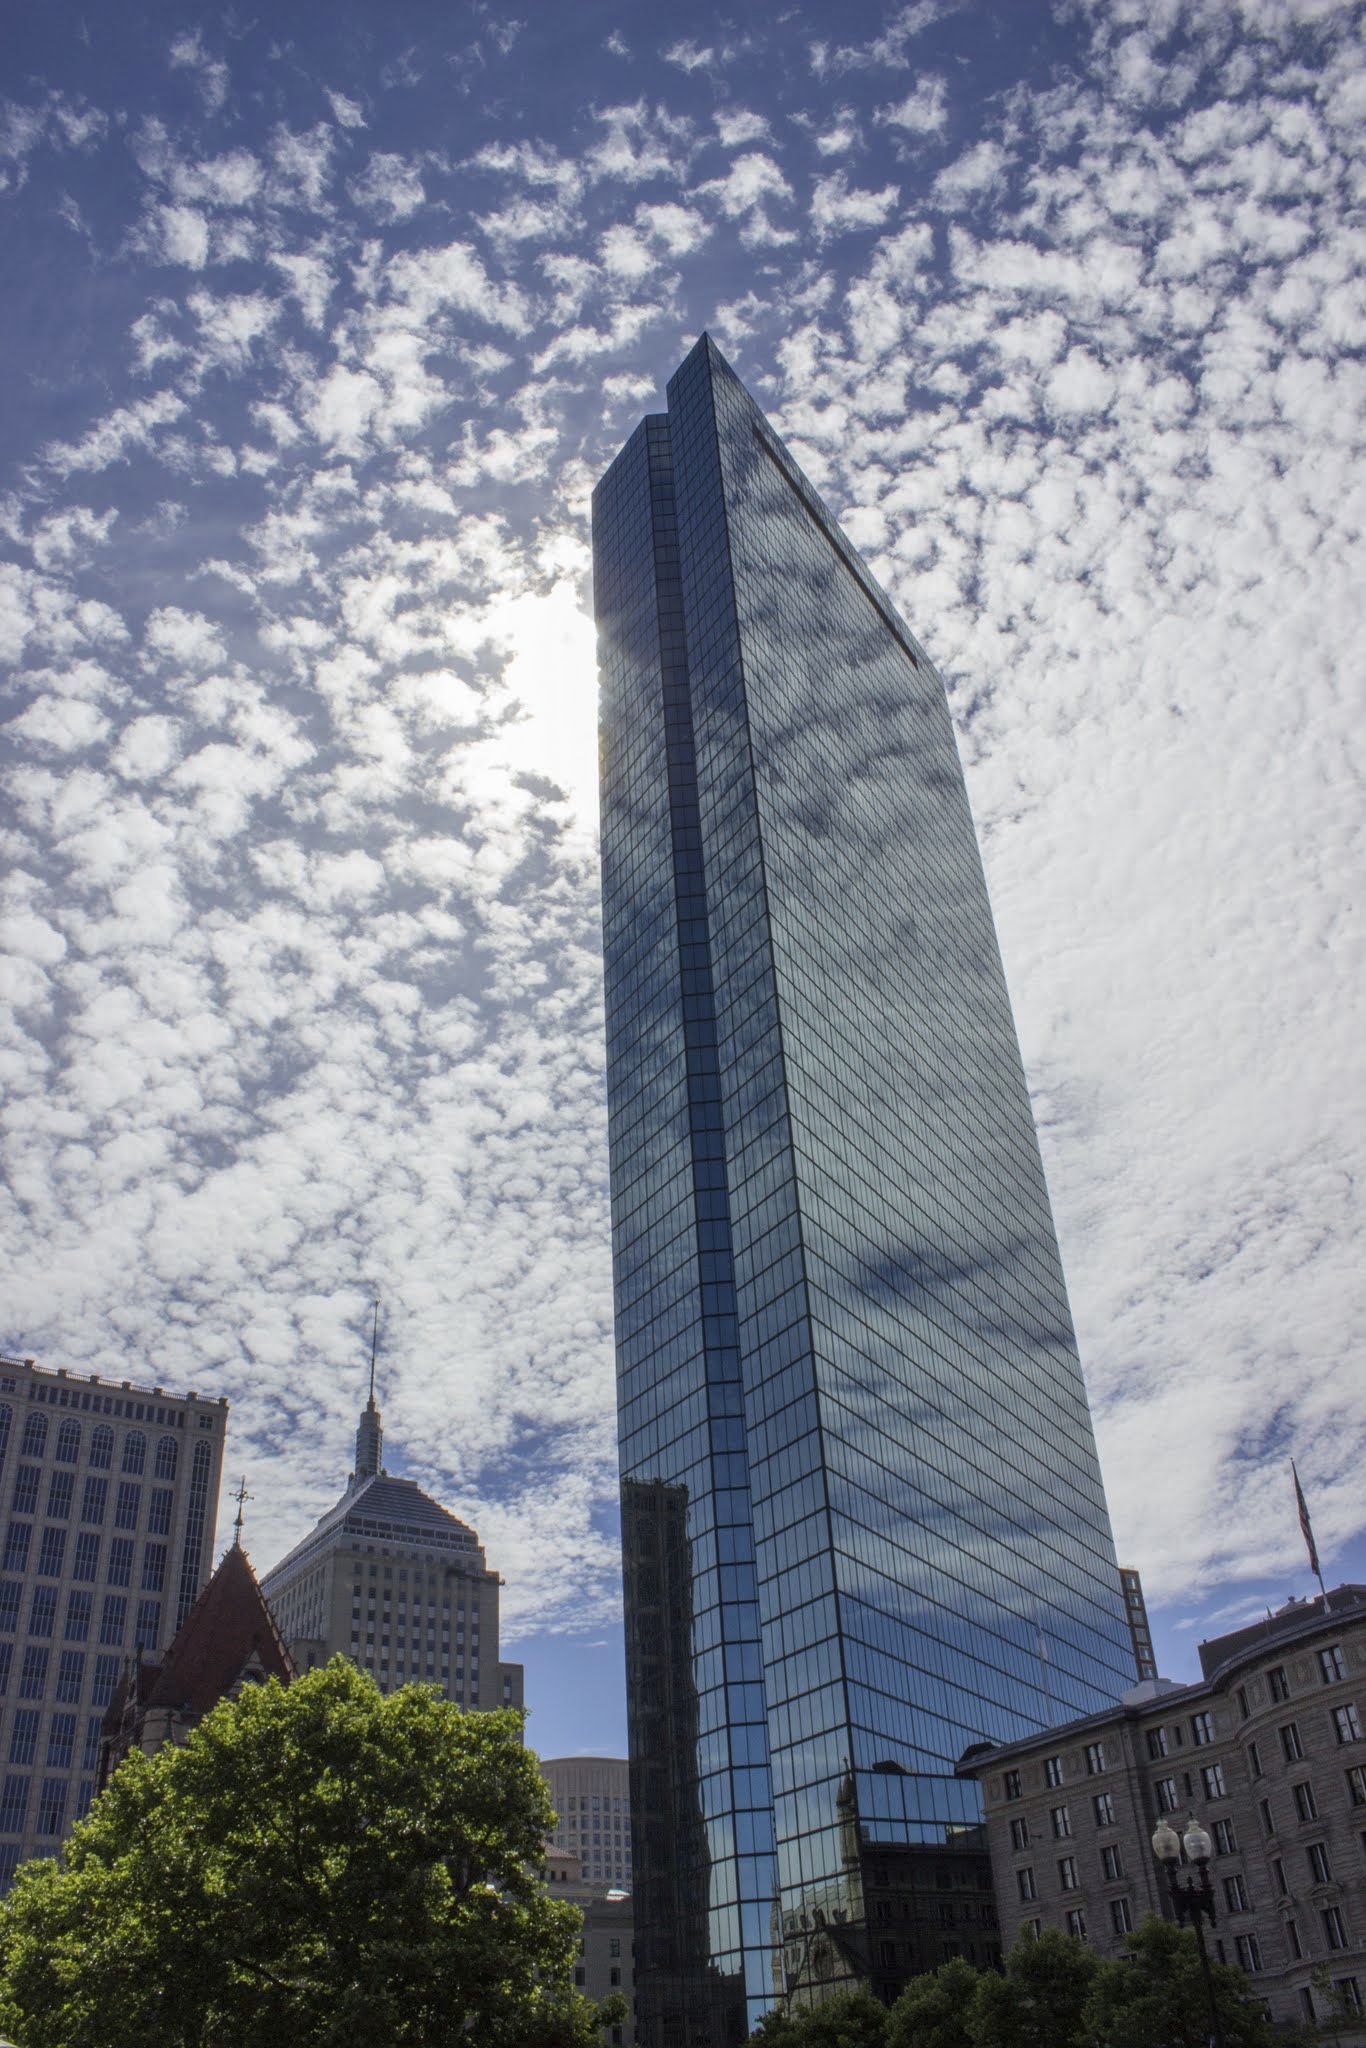 The Hancock Tower